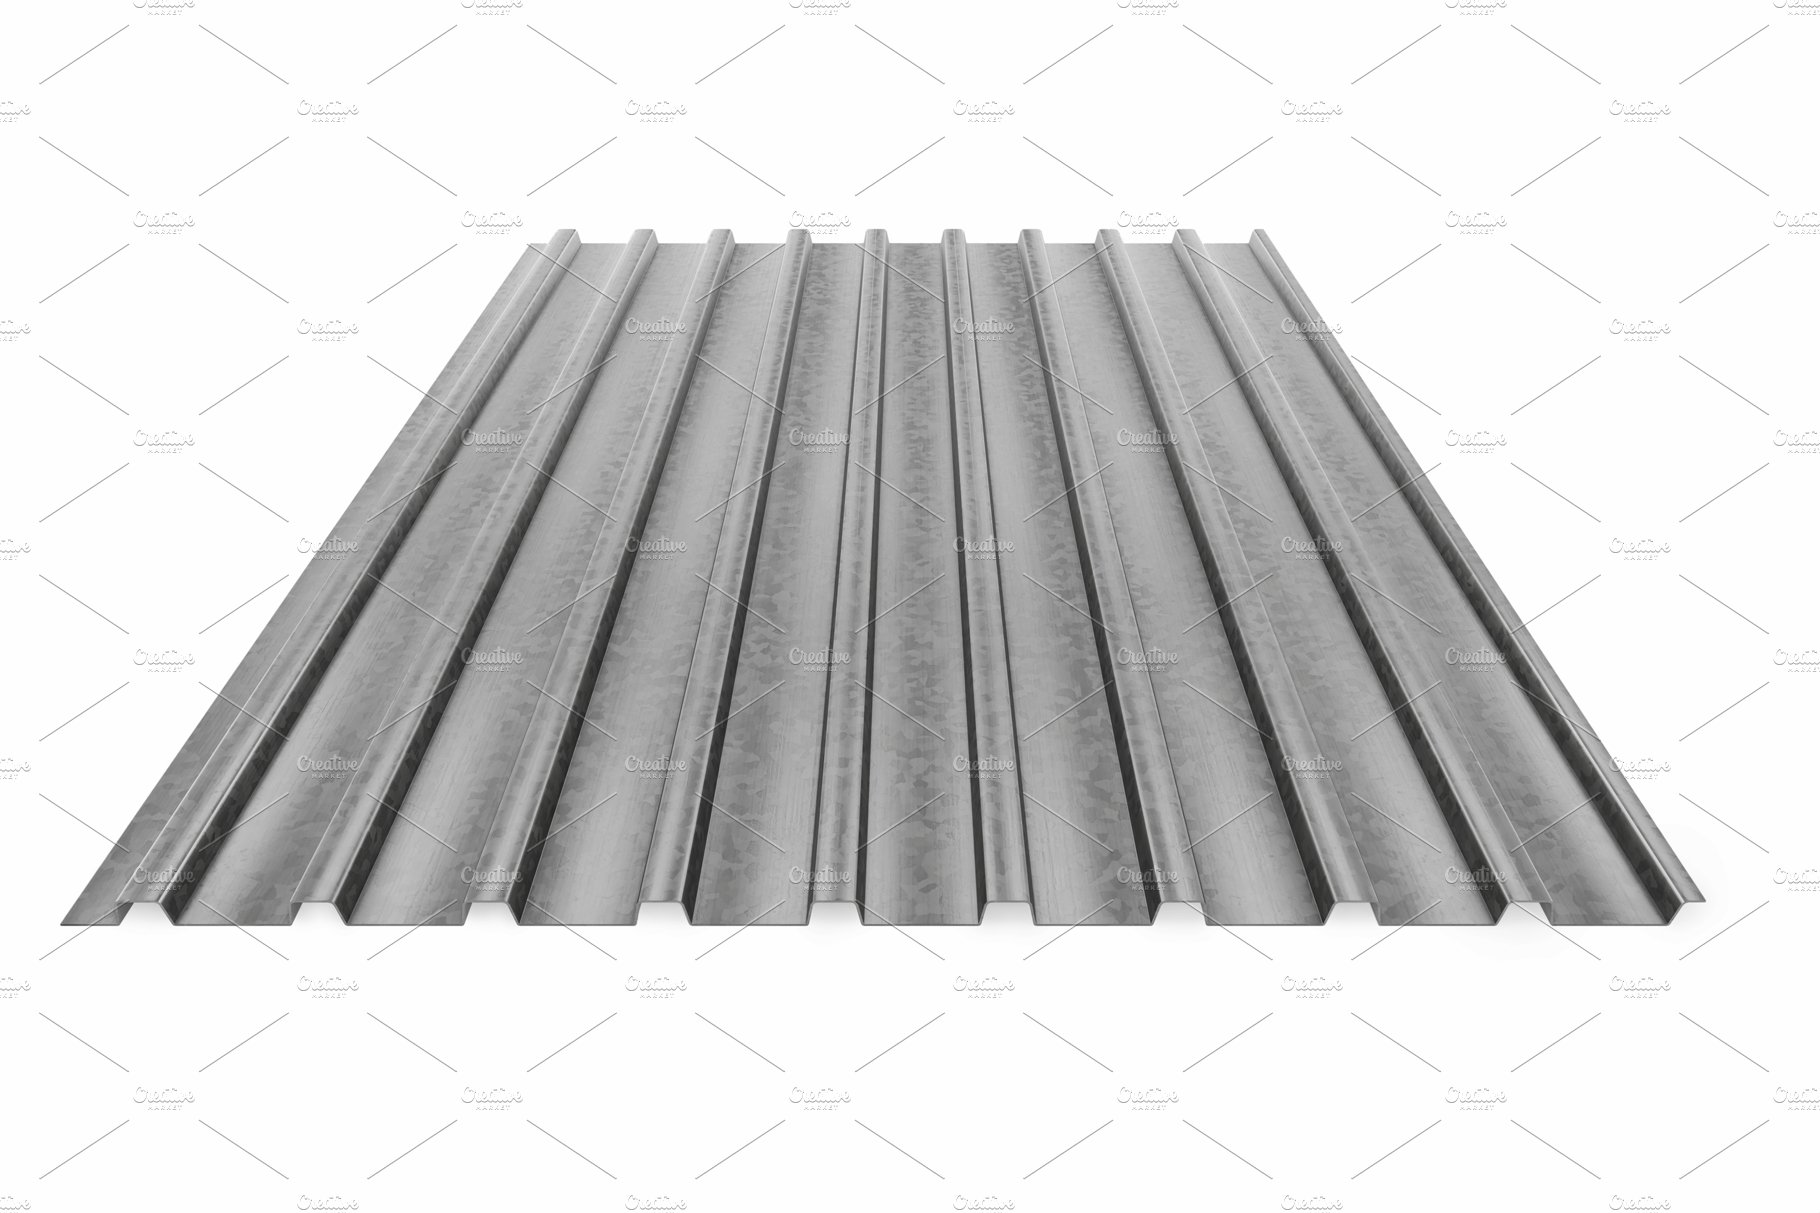 Corrugated galvanised iron 3D cover image.